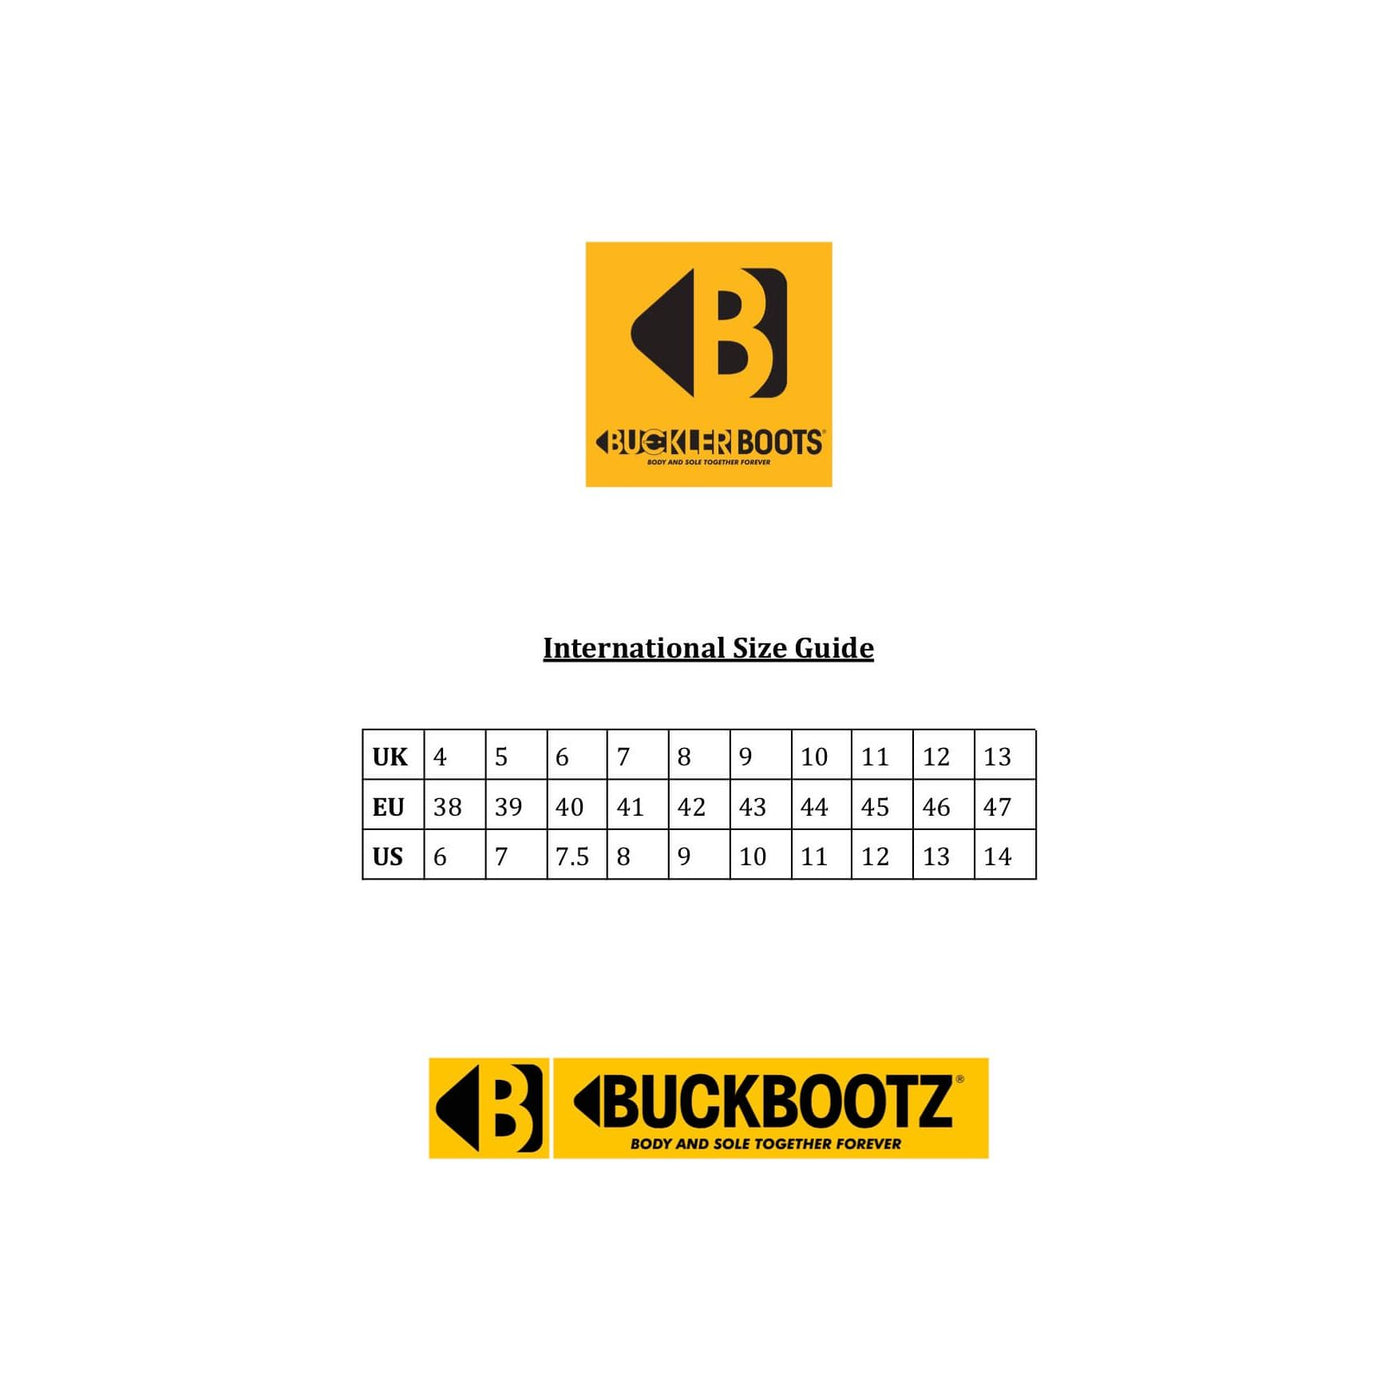 Buckbootz B425 Goodyear Welted Safety Boots Buckler Boots